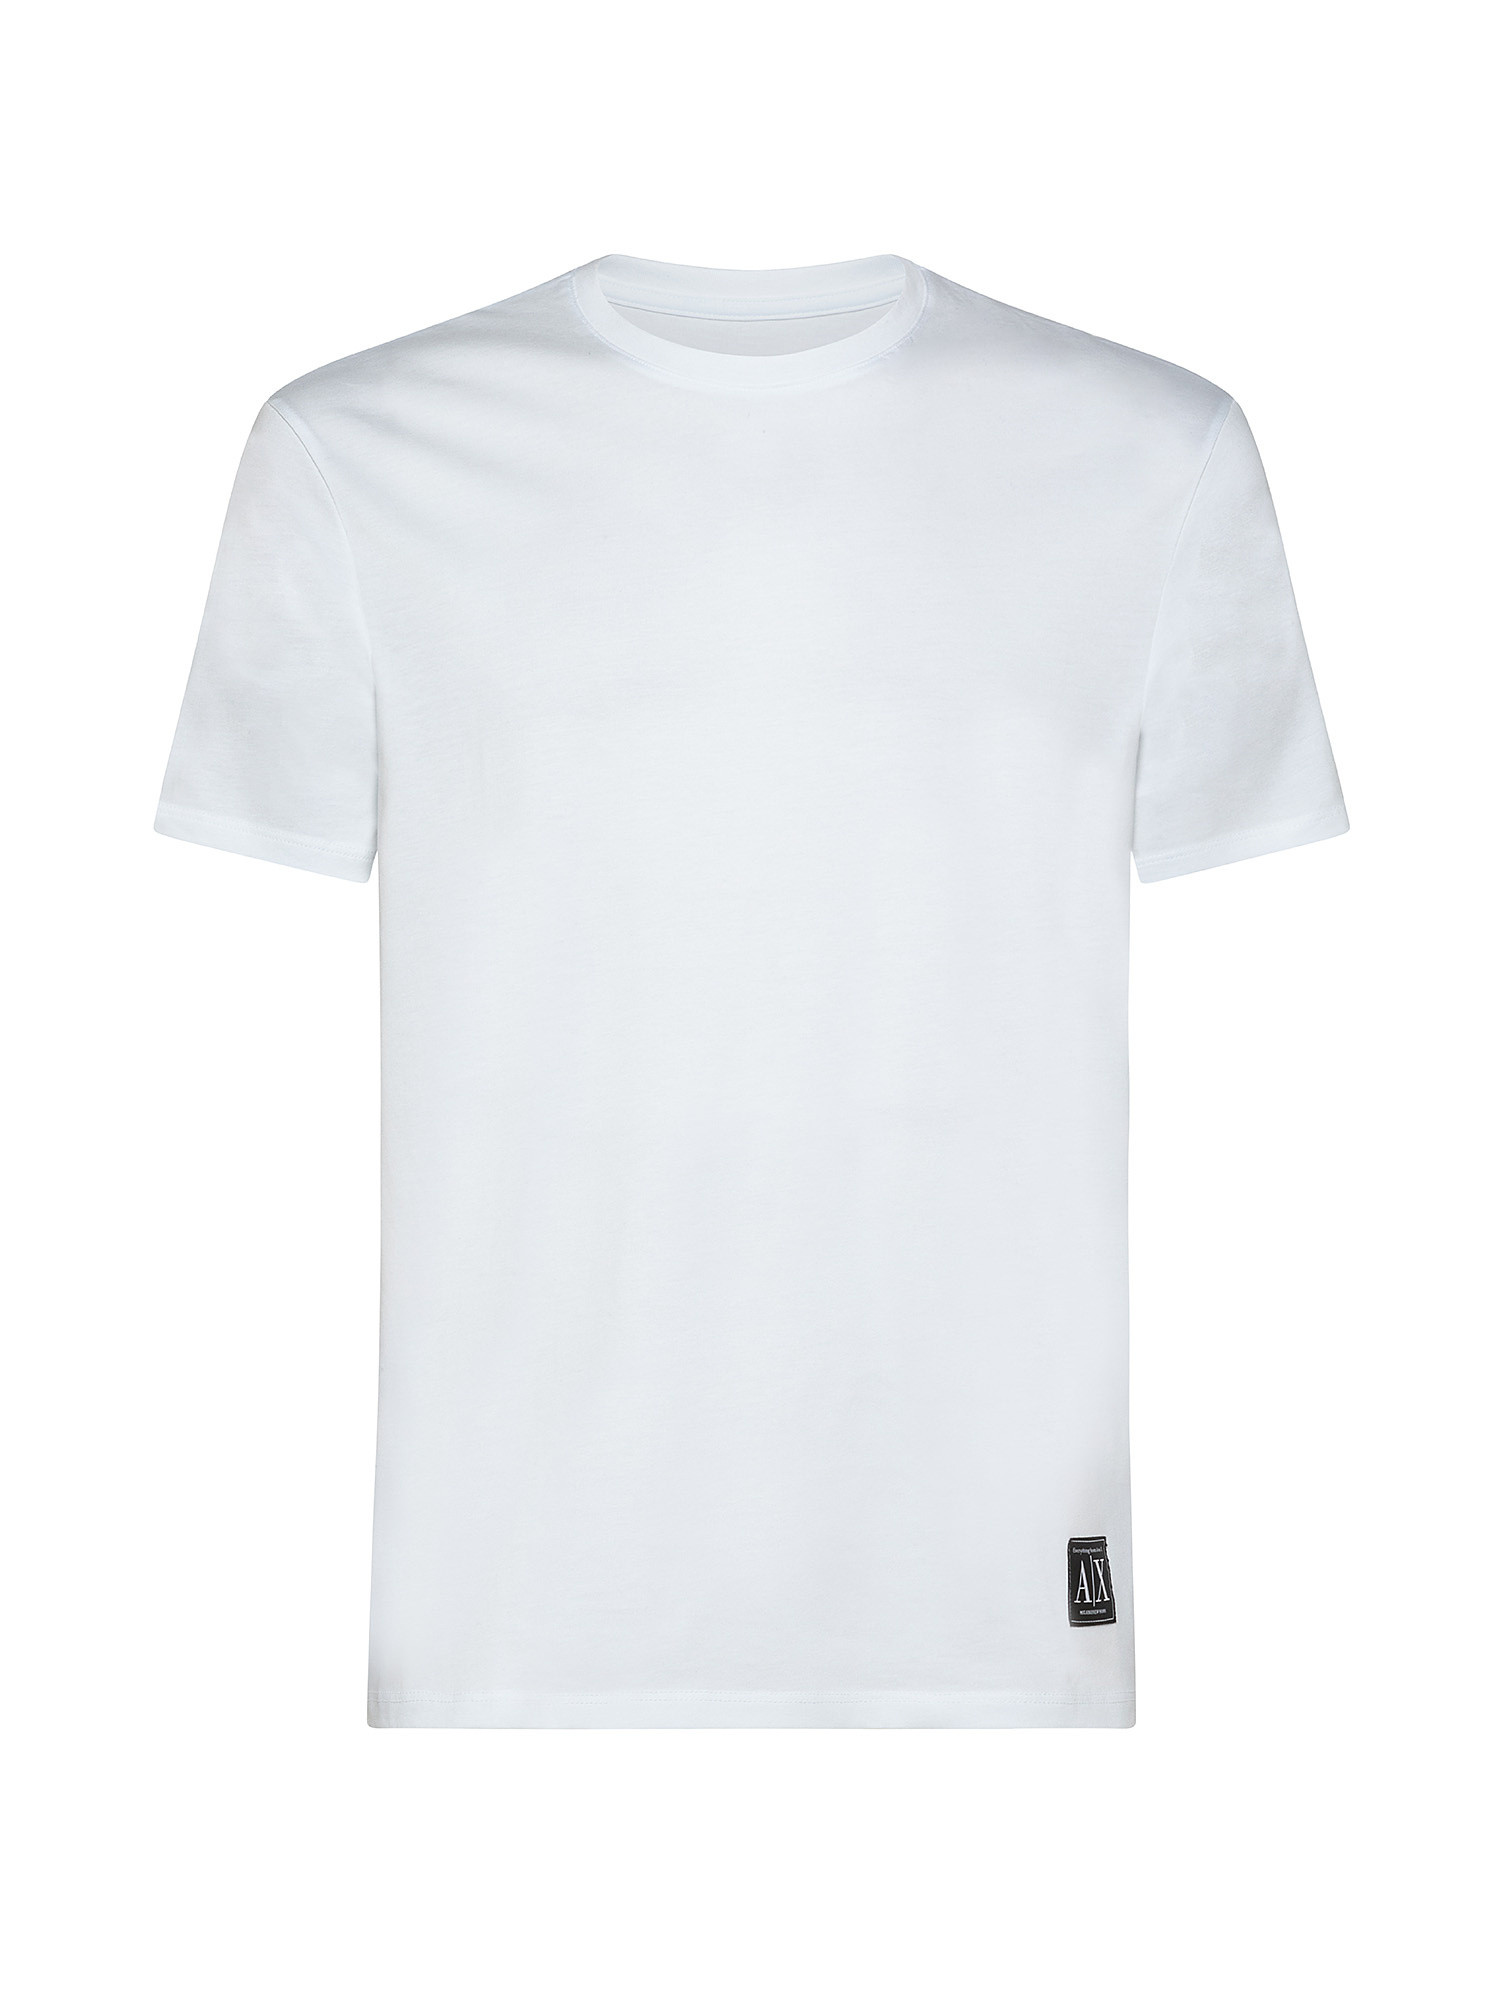 T-shirt, White, large image number 0